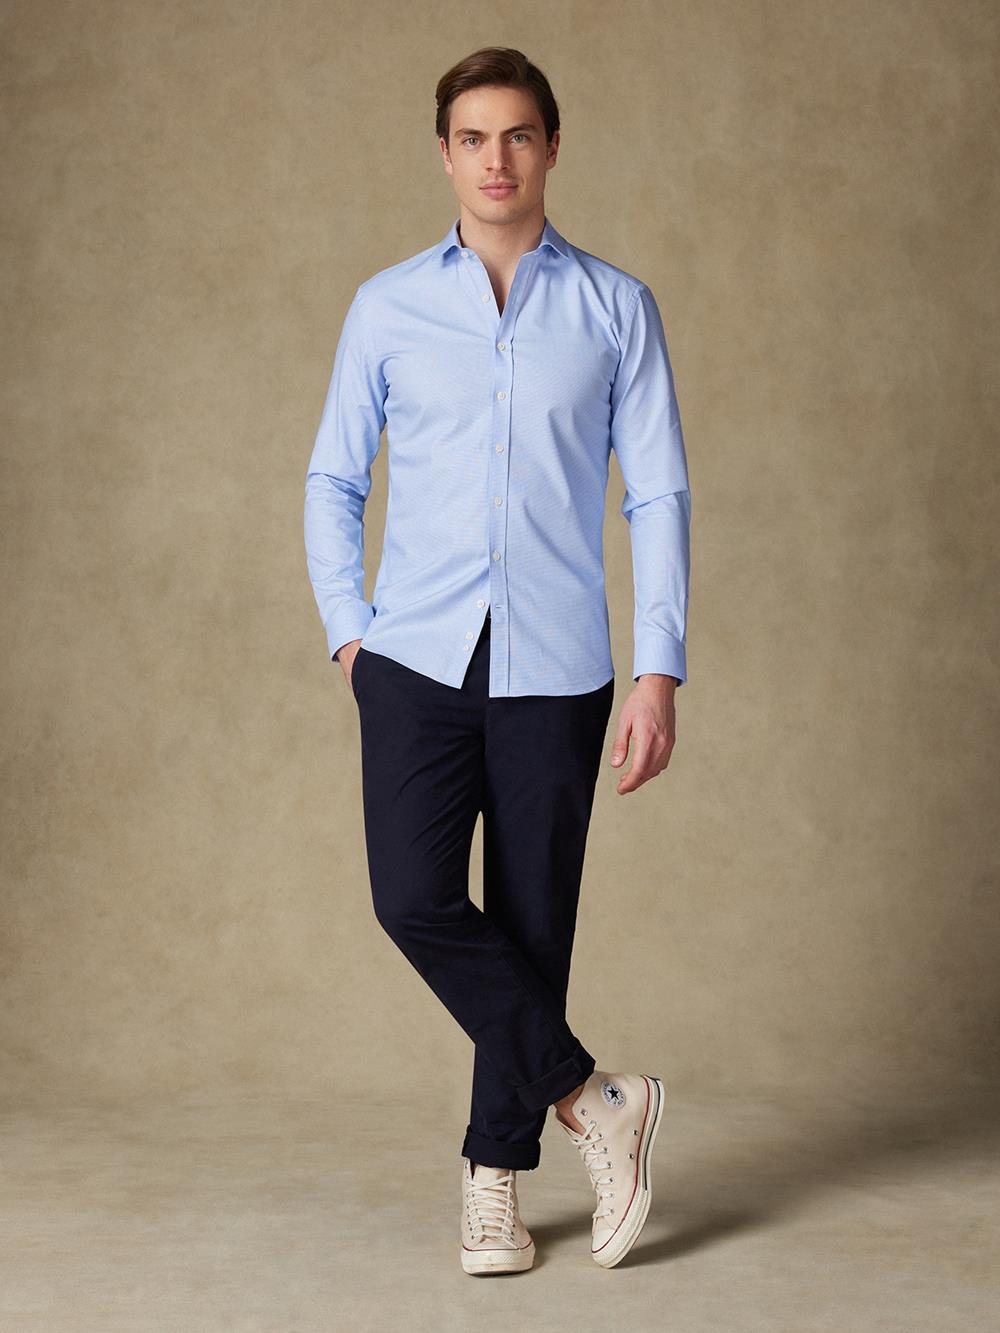 Conan textured slim fit shirt - Blue